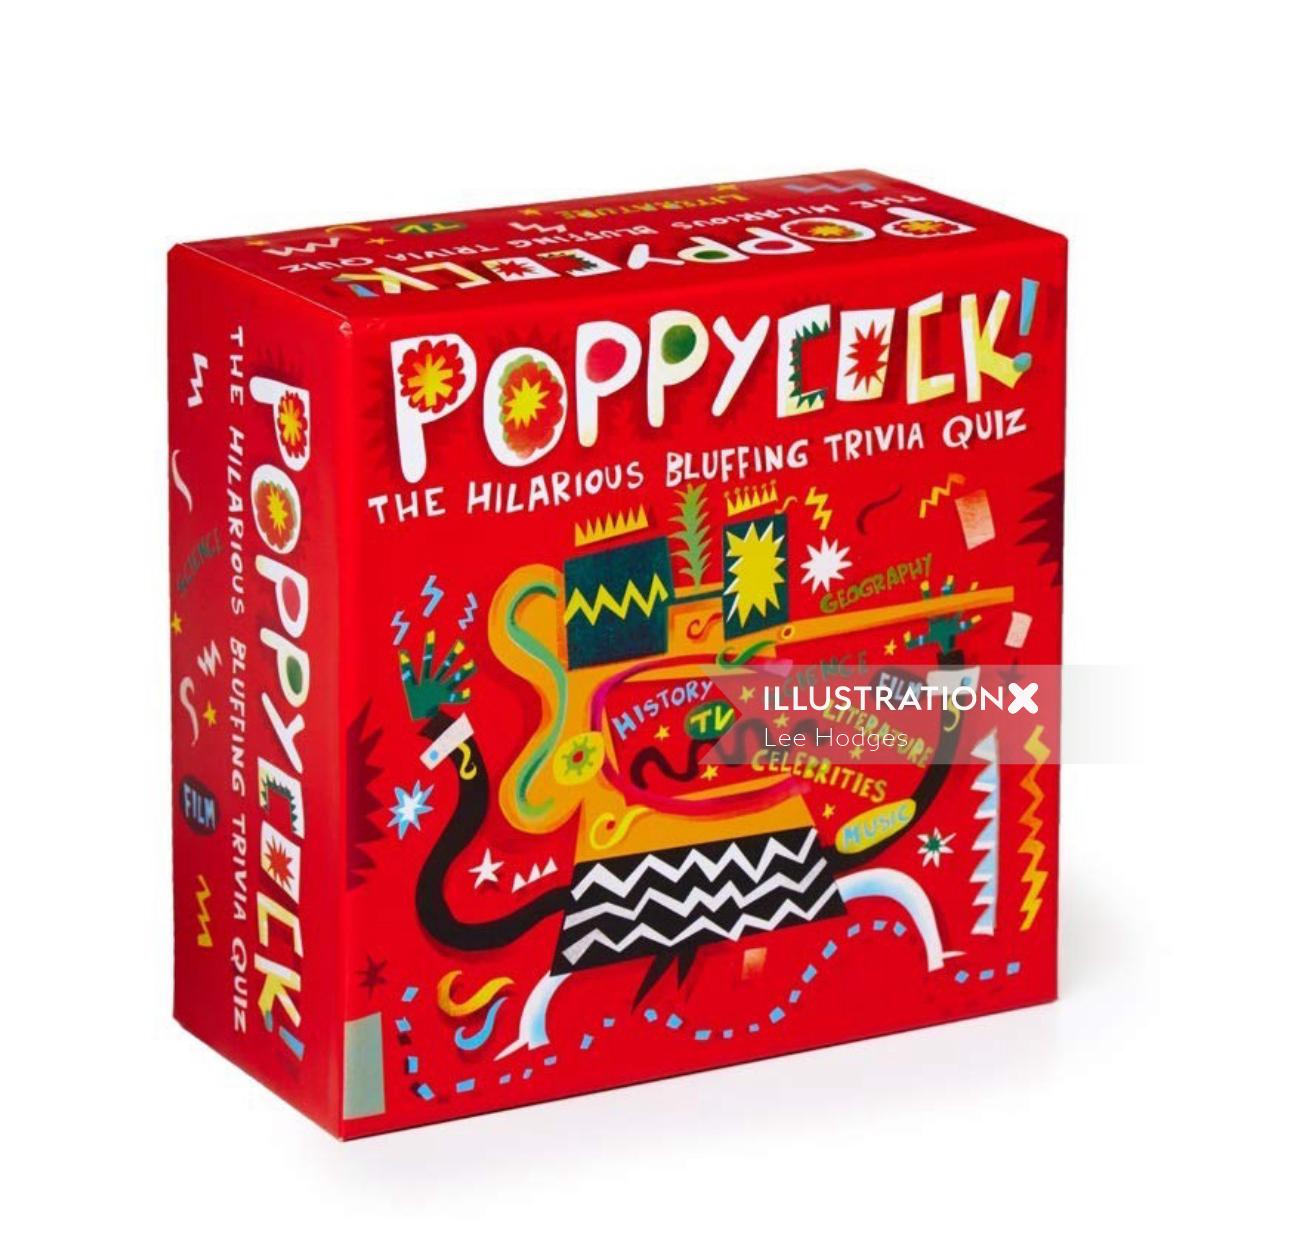 Poppycock游戏的包装插图